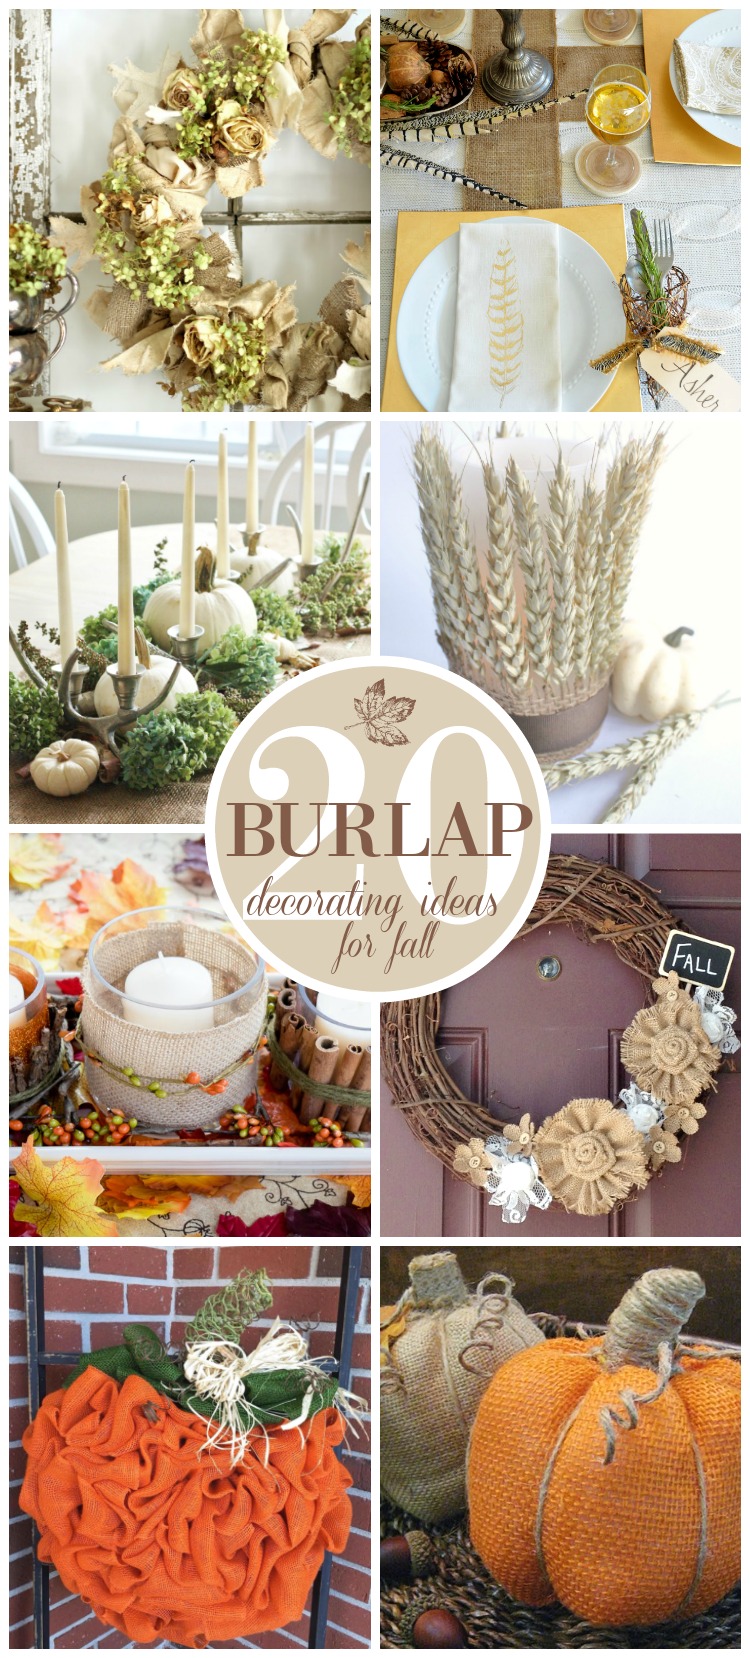 20 Beautiful Burlap Fall Decorating Ideas - Sand and Sisal